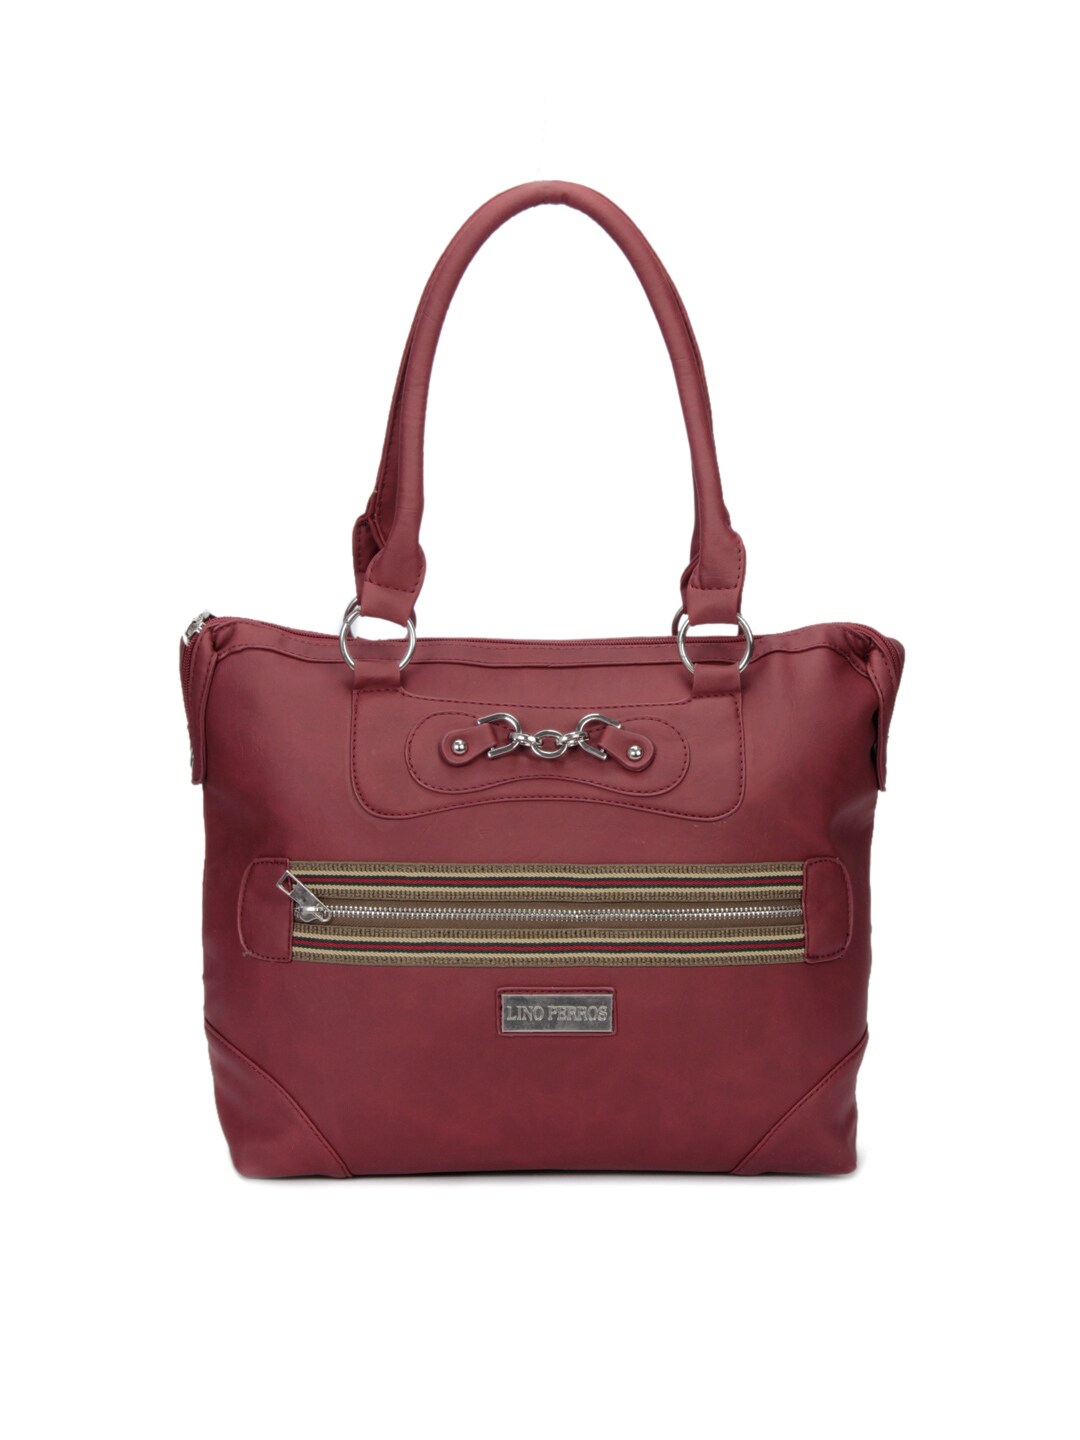 Lino Perros Women Leatherette Maroon Handbag